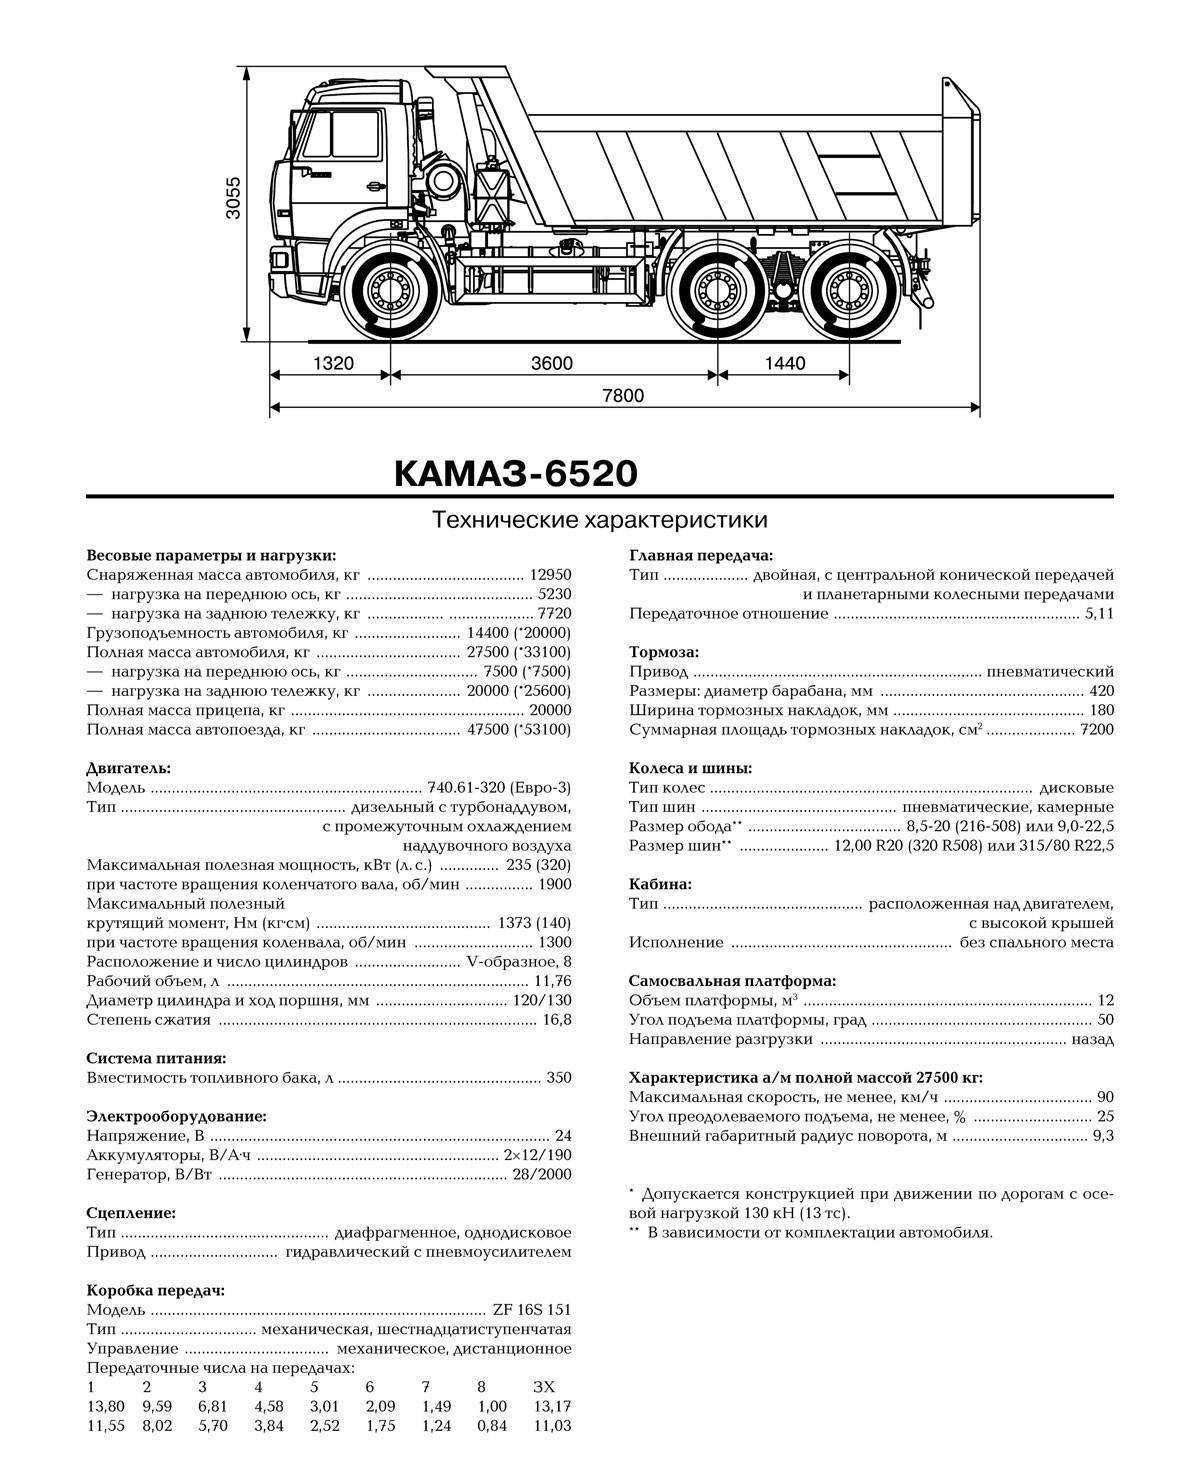 Сколько надо камазов. Параметры КАМАЗ 6520 самосвал. КАМАЗ 6520 технические характеристики кузова. КАМАЗ-6520 технические характеристики грузоподъемность. КАМАЗ 6520 - 20 тонн технические характеристики.